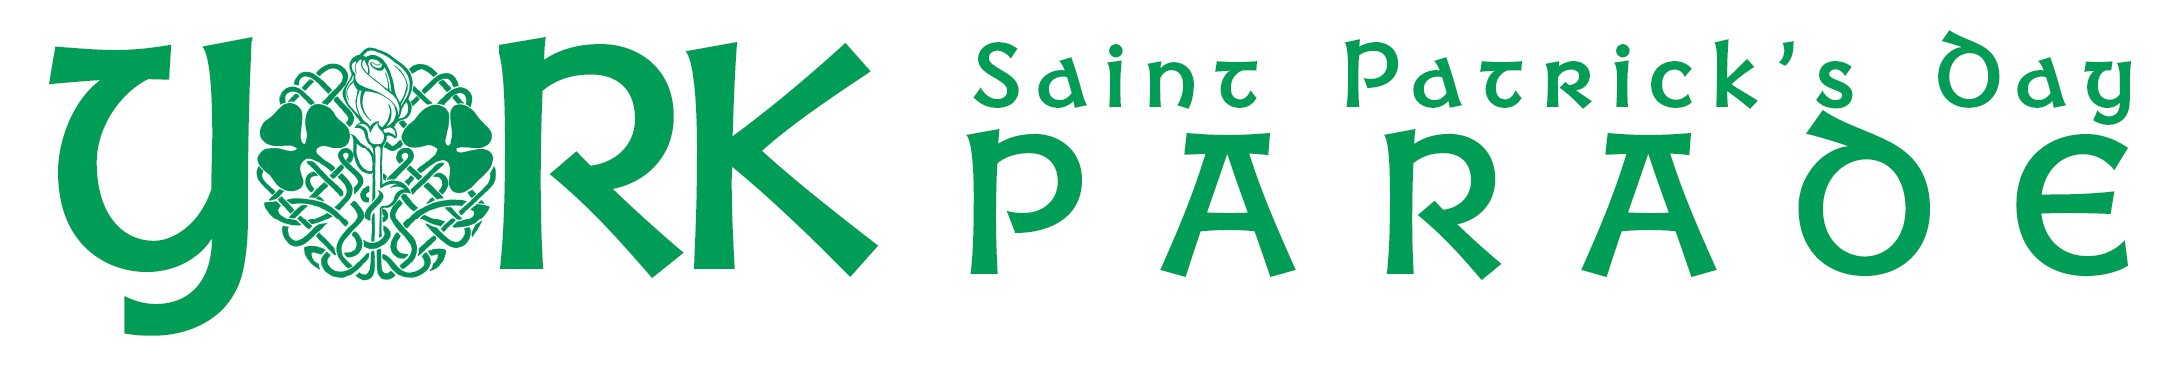 York Saint Patrick's Day Parade logo